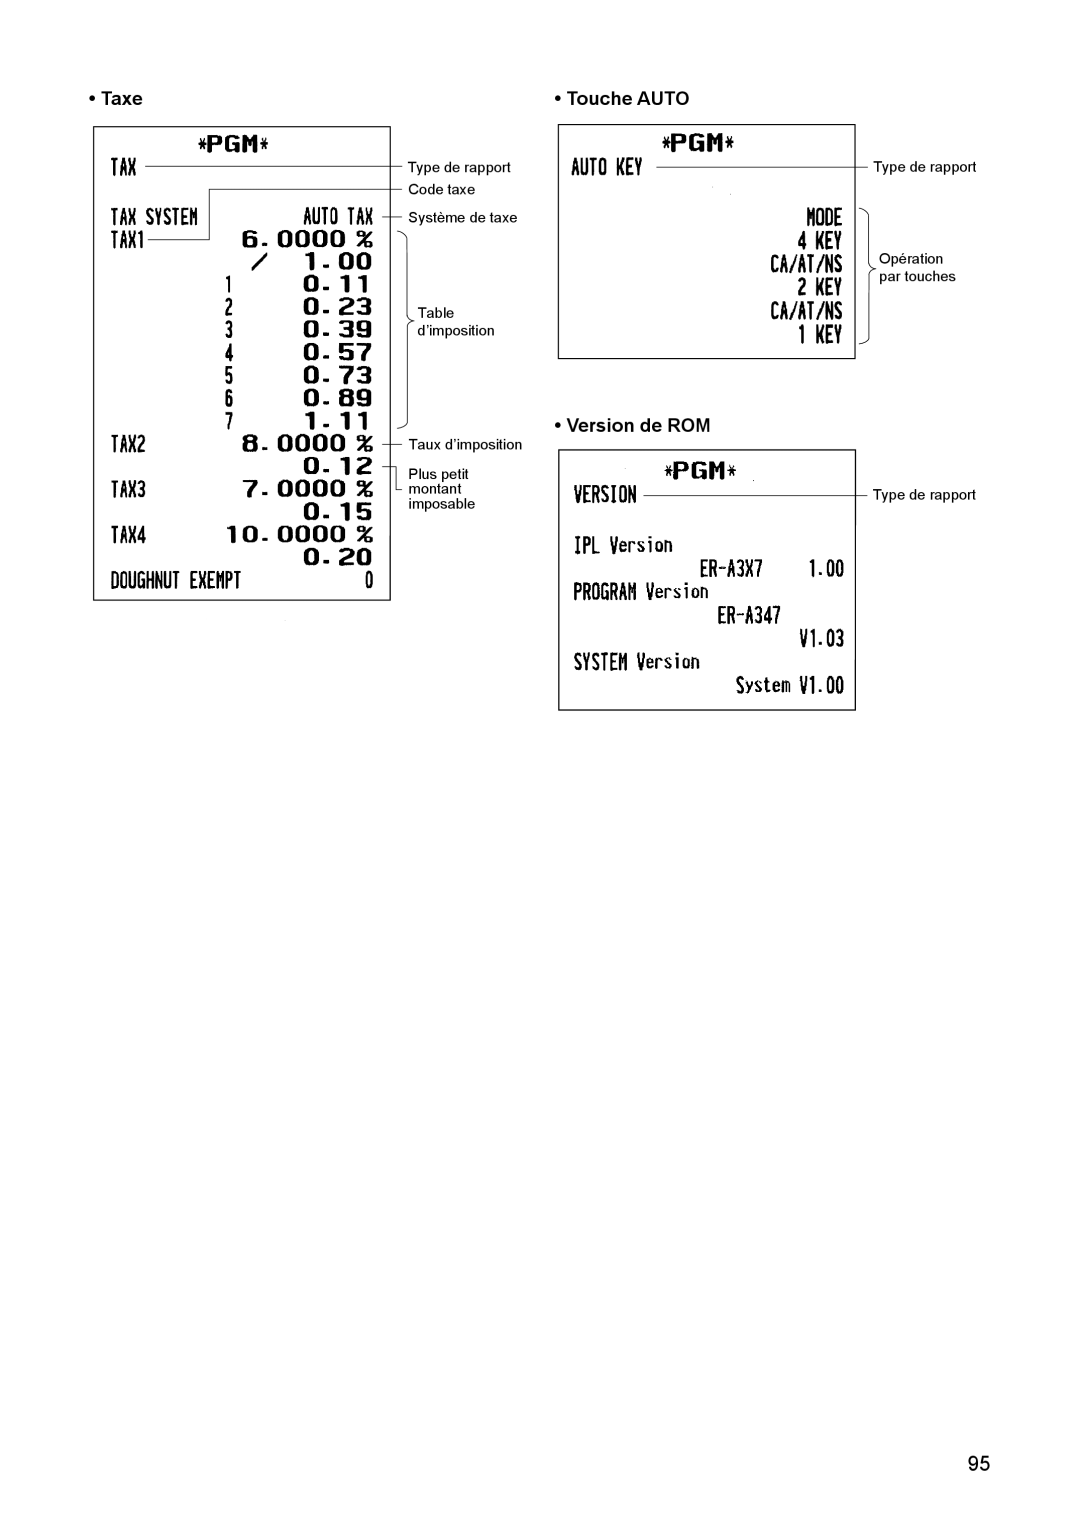 Sharp ER-A347A Taxe, Touche AUTO, Version de ROM, Type de rapport Code taxe Système de taxe Table d’imposition 